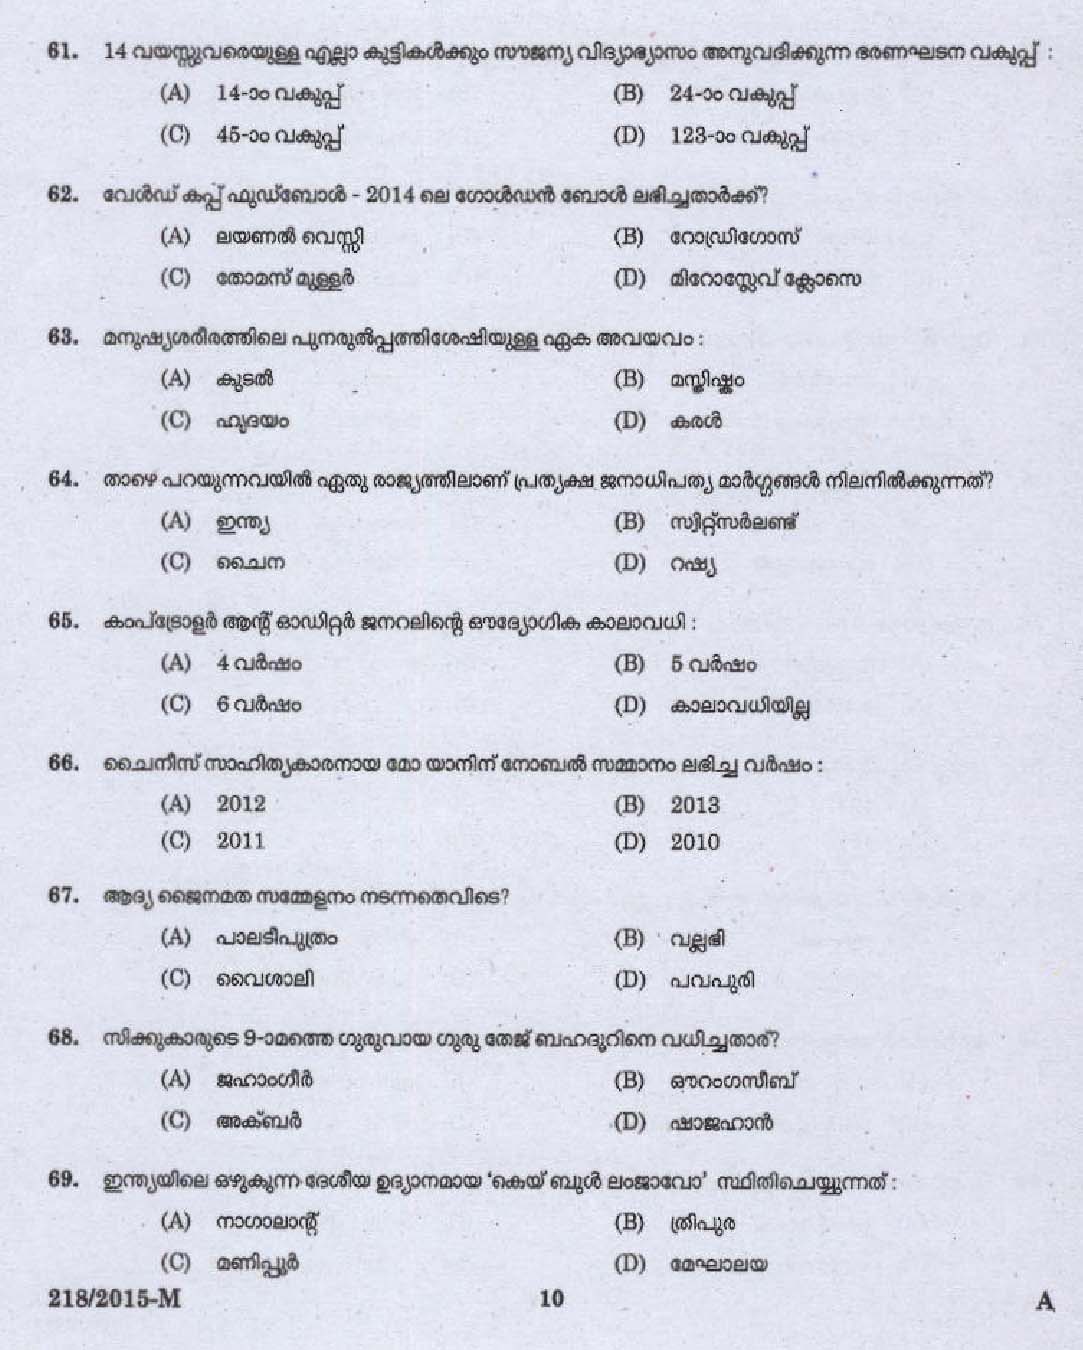 KPSC Ayurveda Therapist Exam Question 2182015 M 8